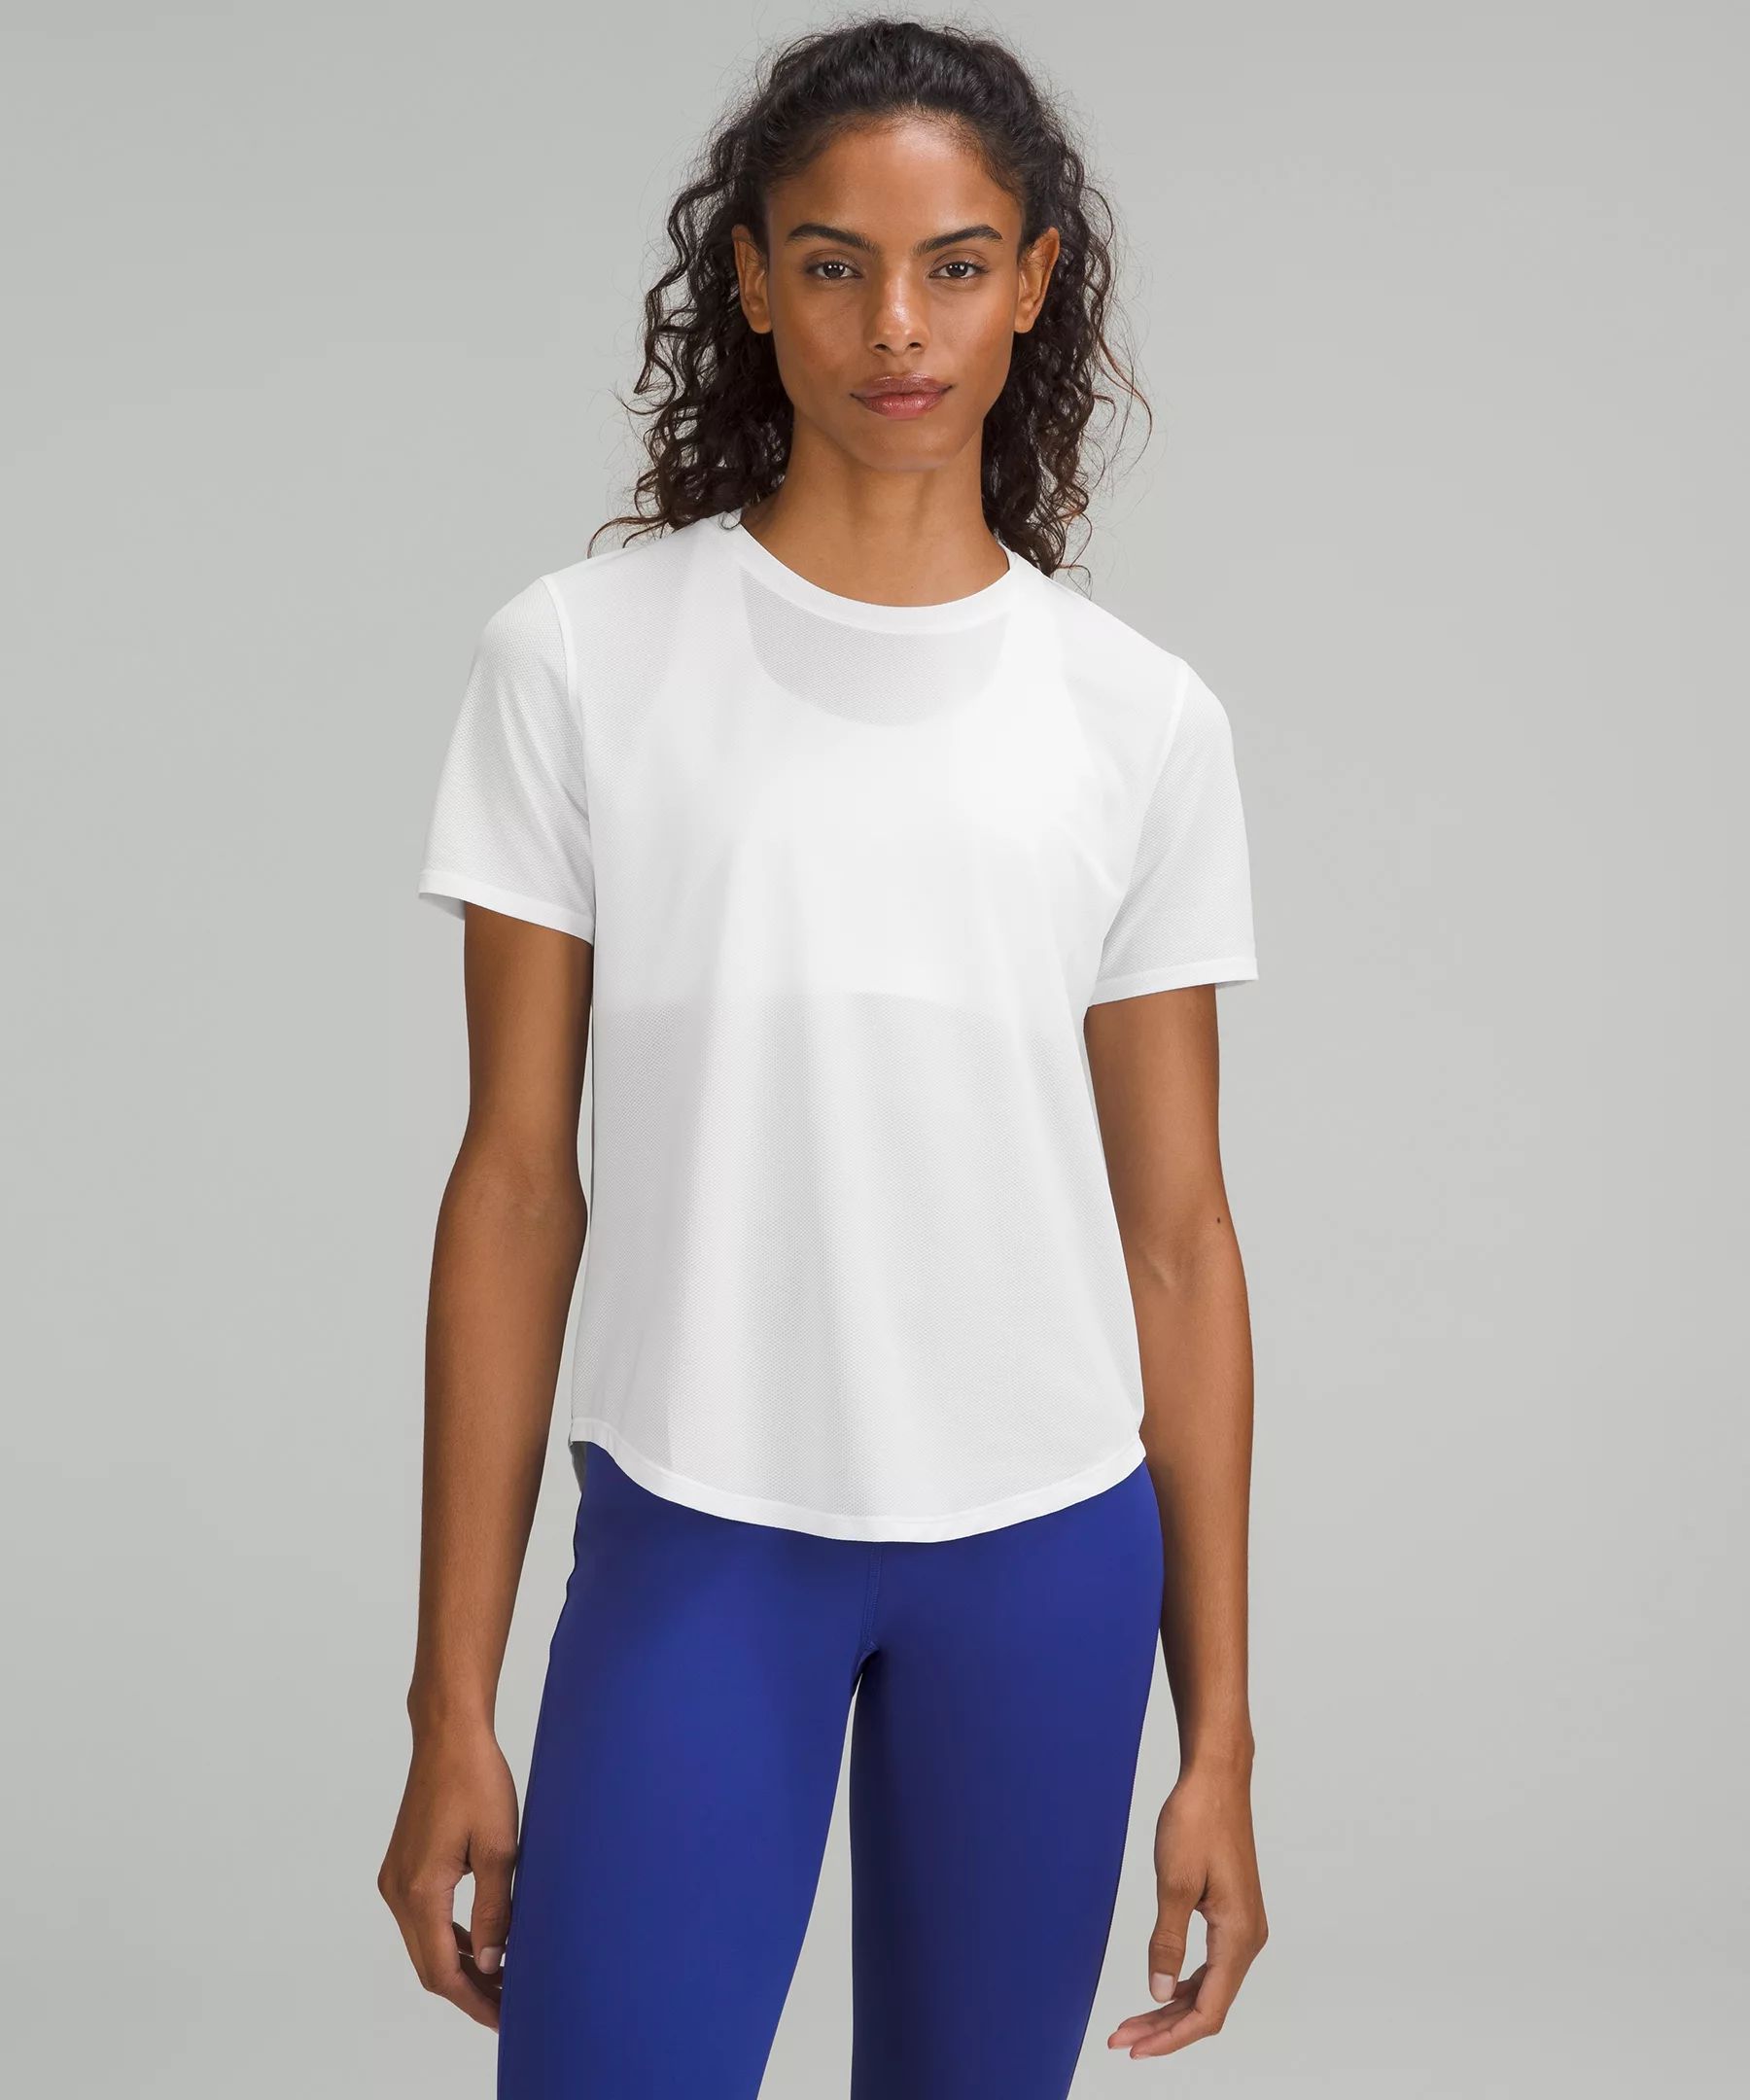 High-Neck Running and Training T-Shirt | Women's Short Sleeve Shirts & Tee's | lululemon | Lululemon (US)